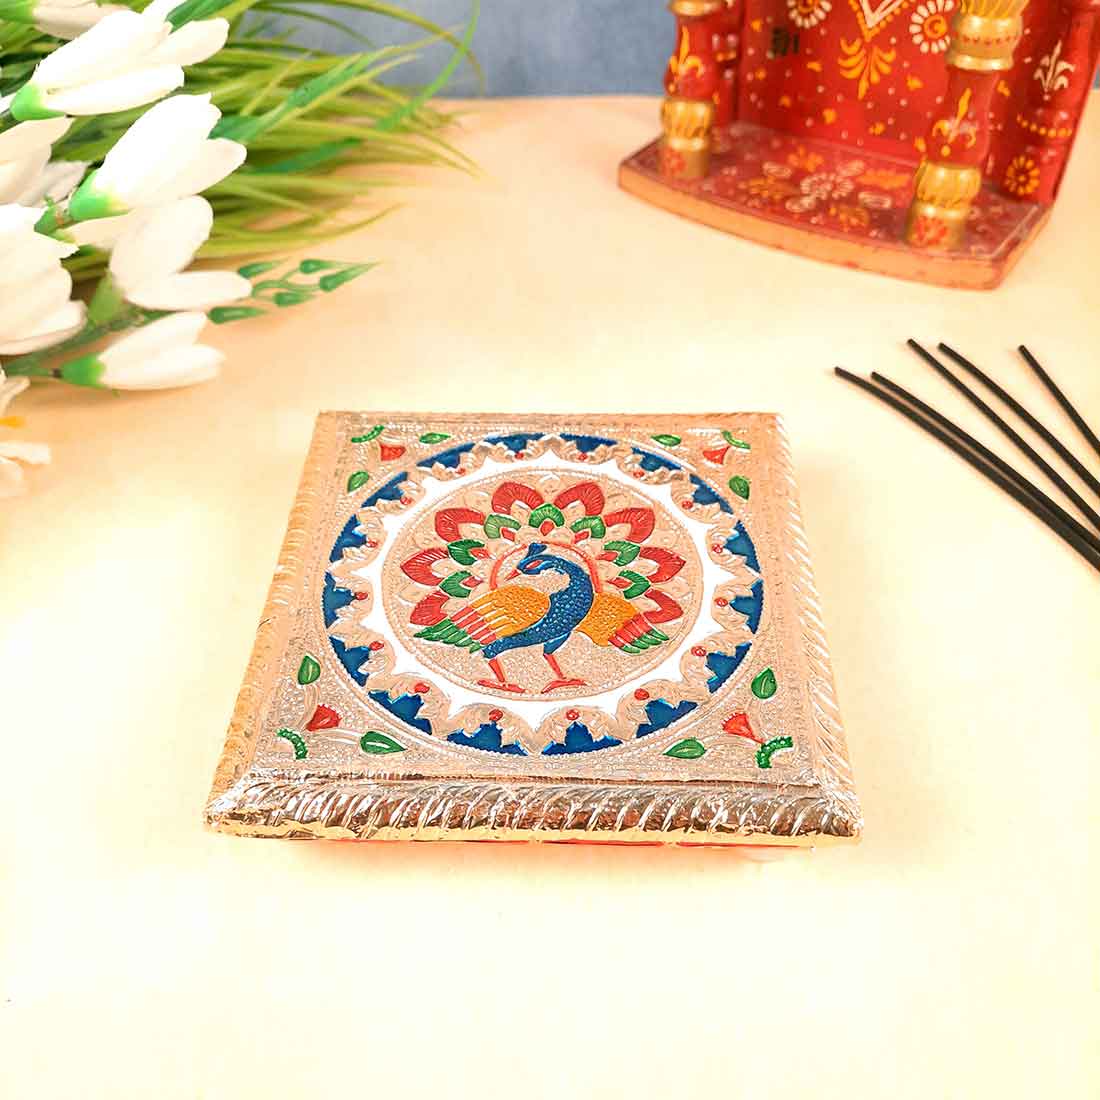 Pooja Chowki Bajot | Wooden Choki Set - For Diwali Pooja, Festivals & Home Decor - 6 Inch - Apkamart #Size_6 Inch